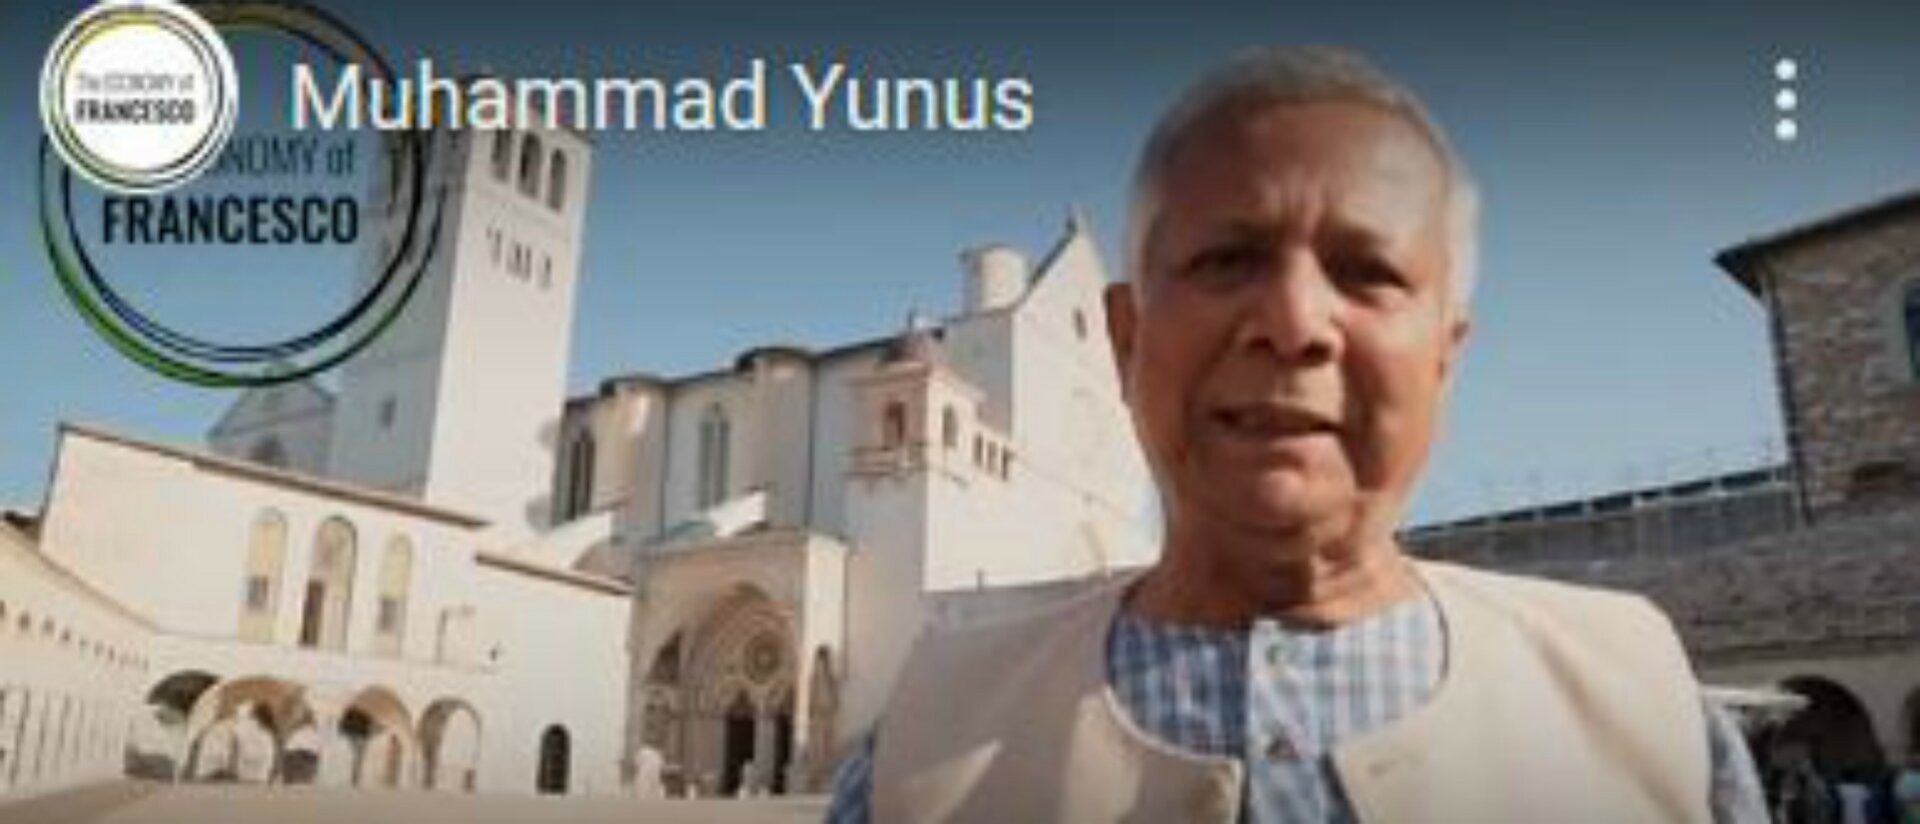 Professeur Muhammad Yunus, du Bangladesh, fondateur de la Grameen Bank, sera présent en mars 2020 à la rencontre internationale 'The Economy of Francesco' | youtube